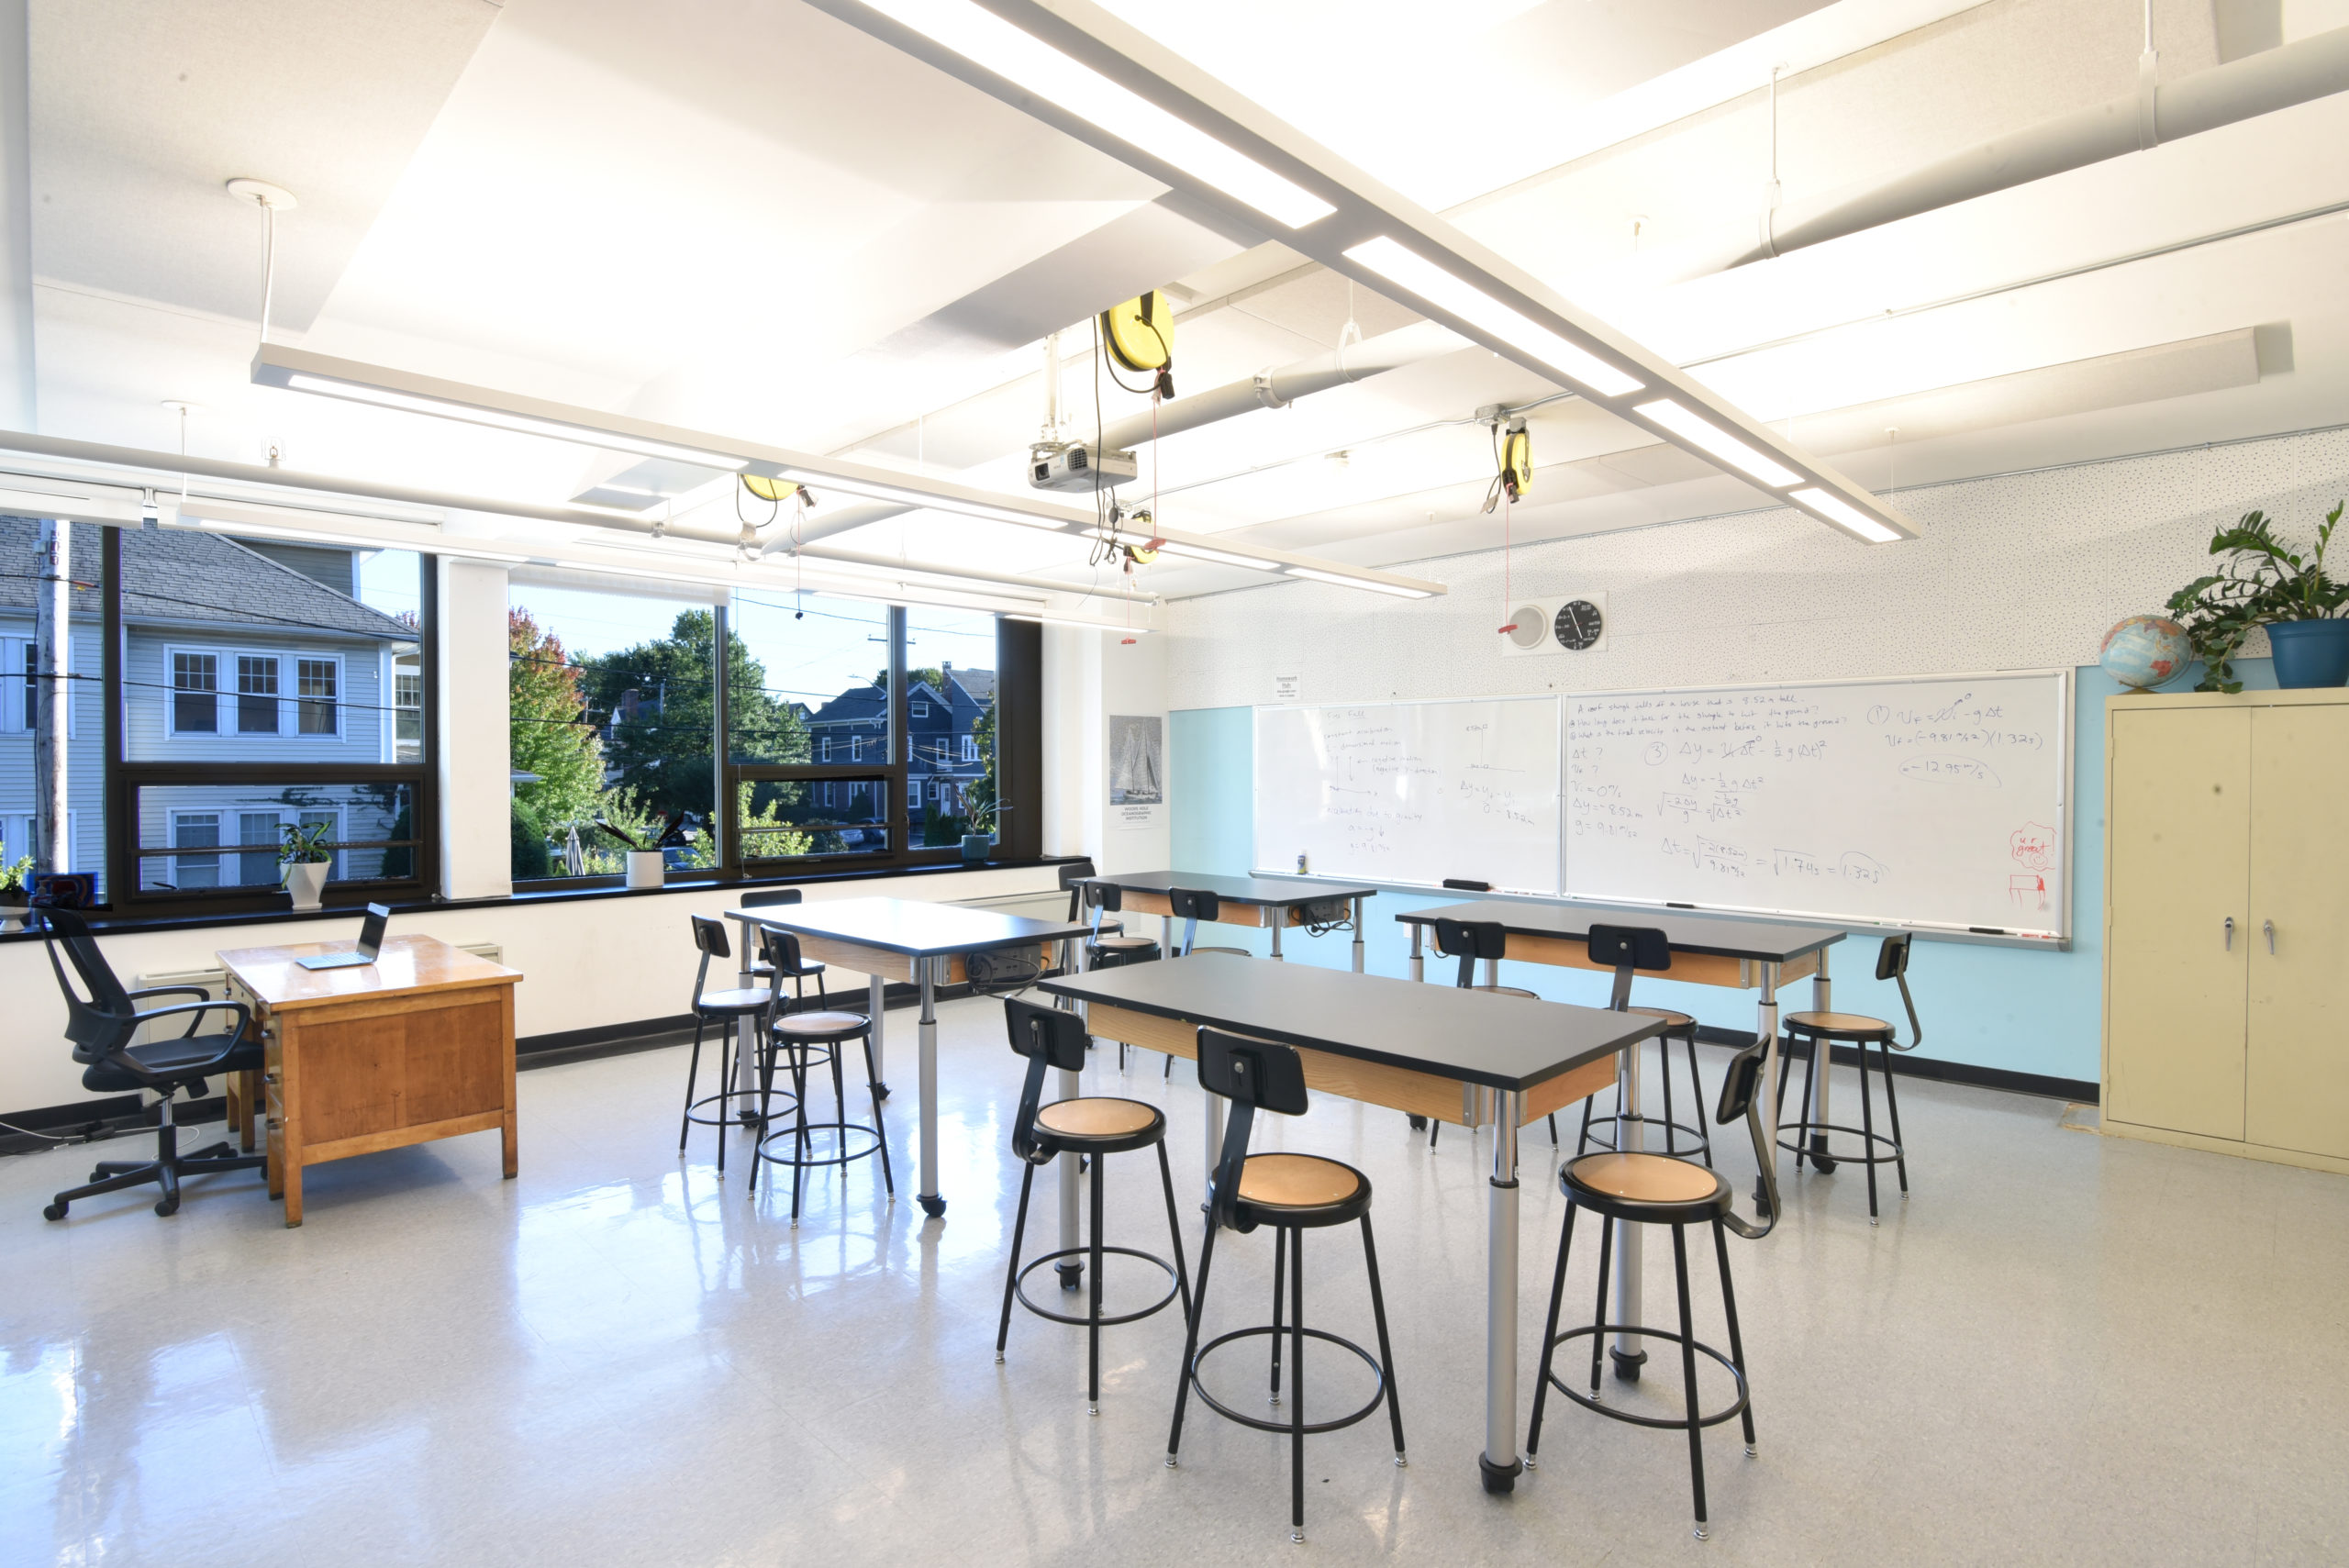 KITE-Architects-School-One-Providence-classroom